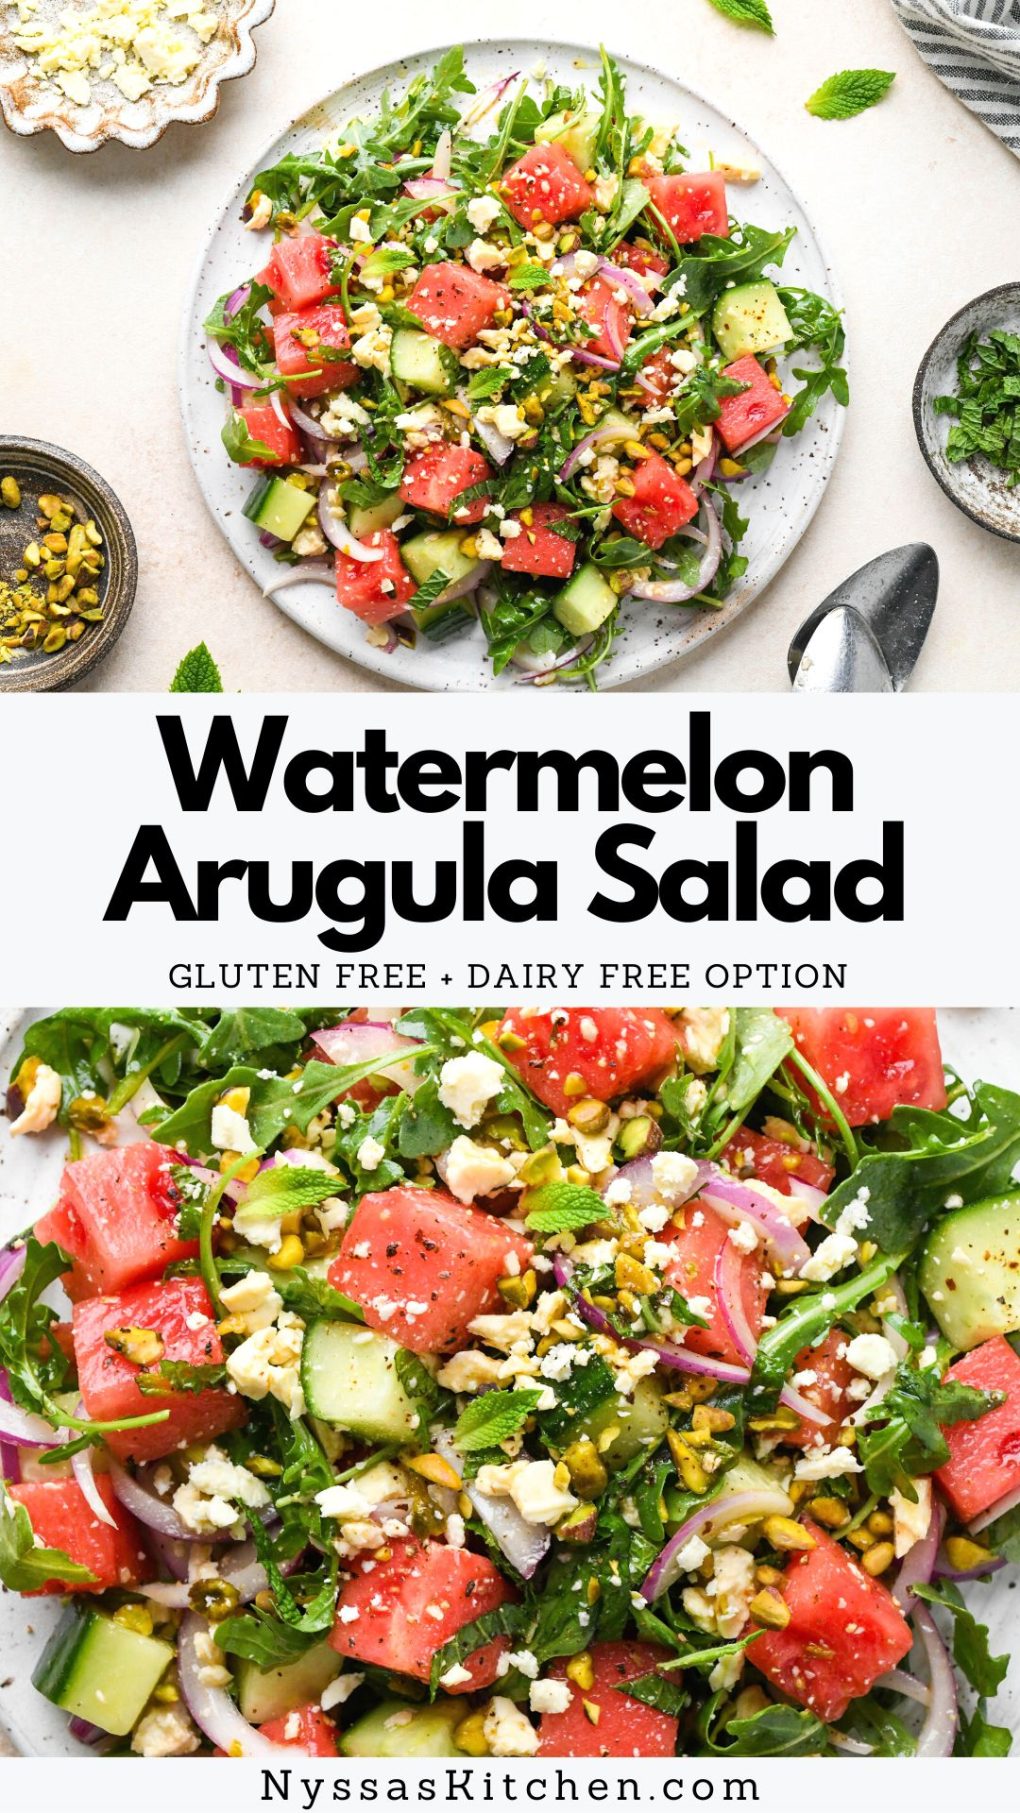 Pinterest pin for watermelon arugula salad